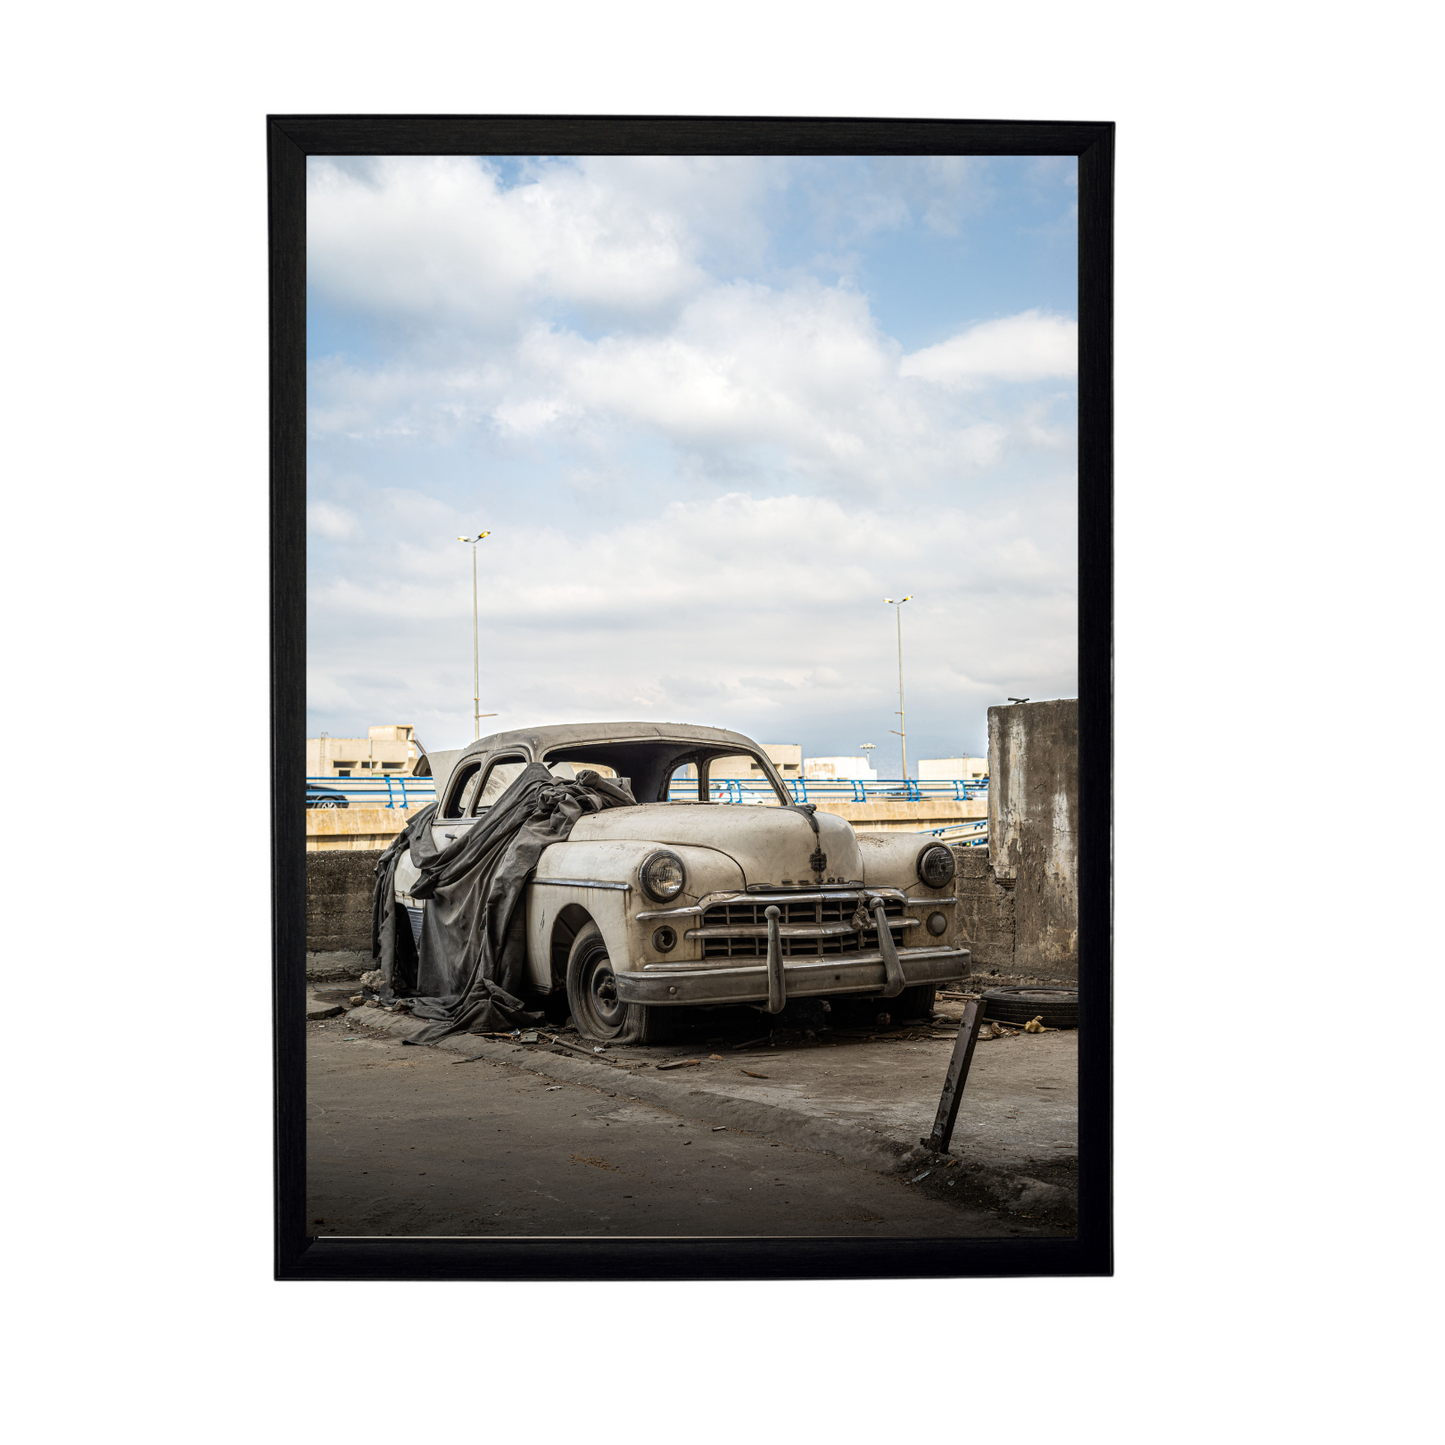 Car (August 3 2020 Series) - Elias Daaboul